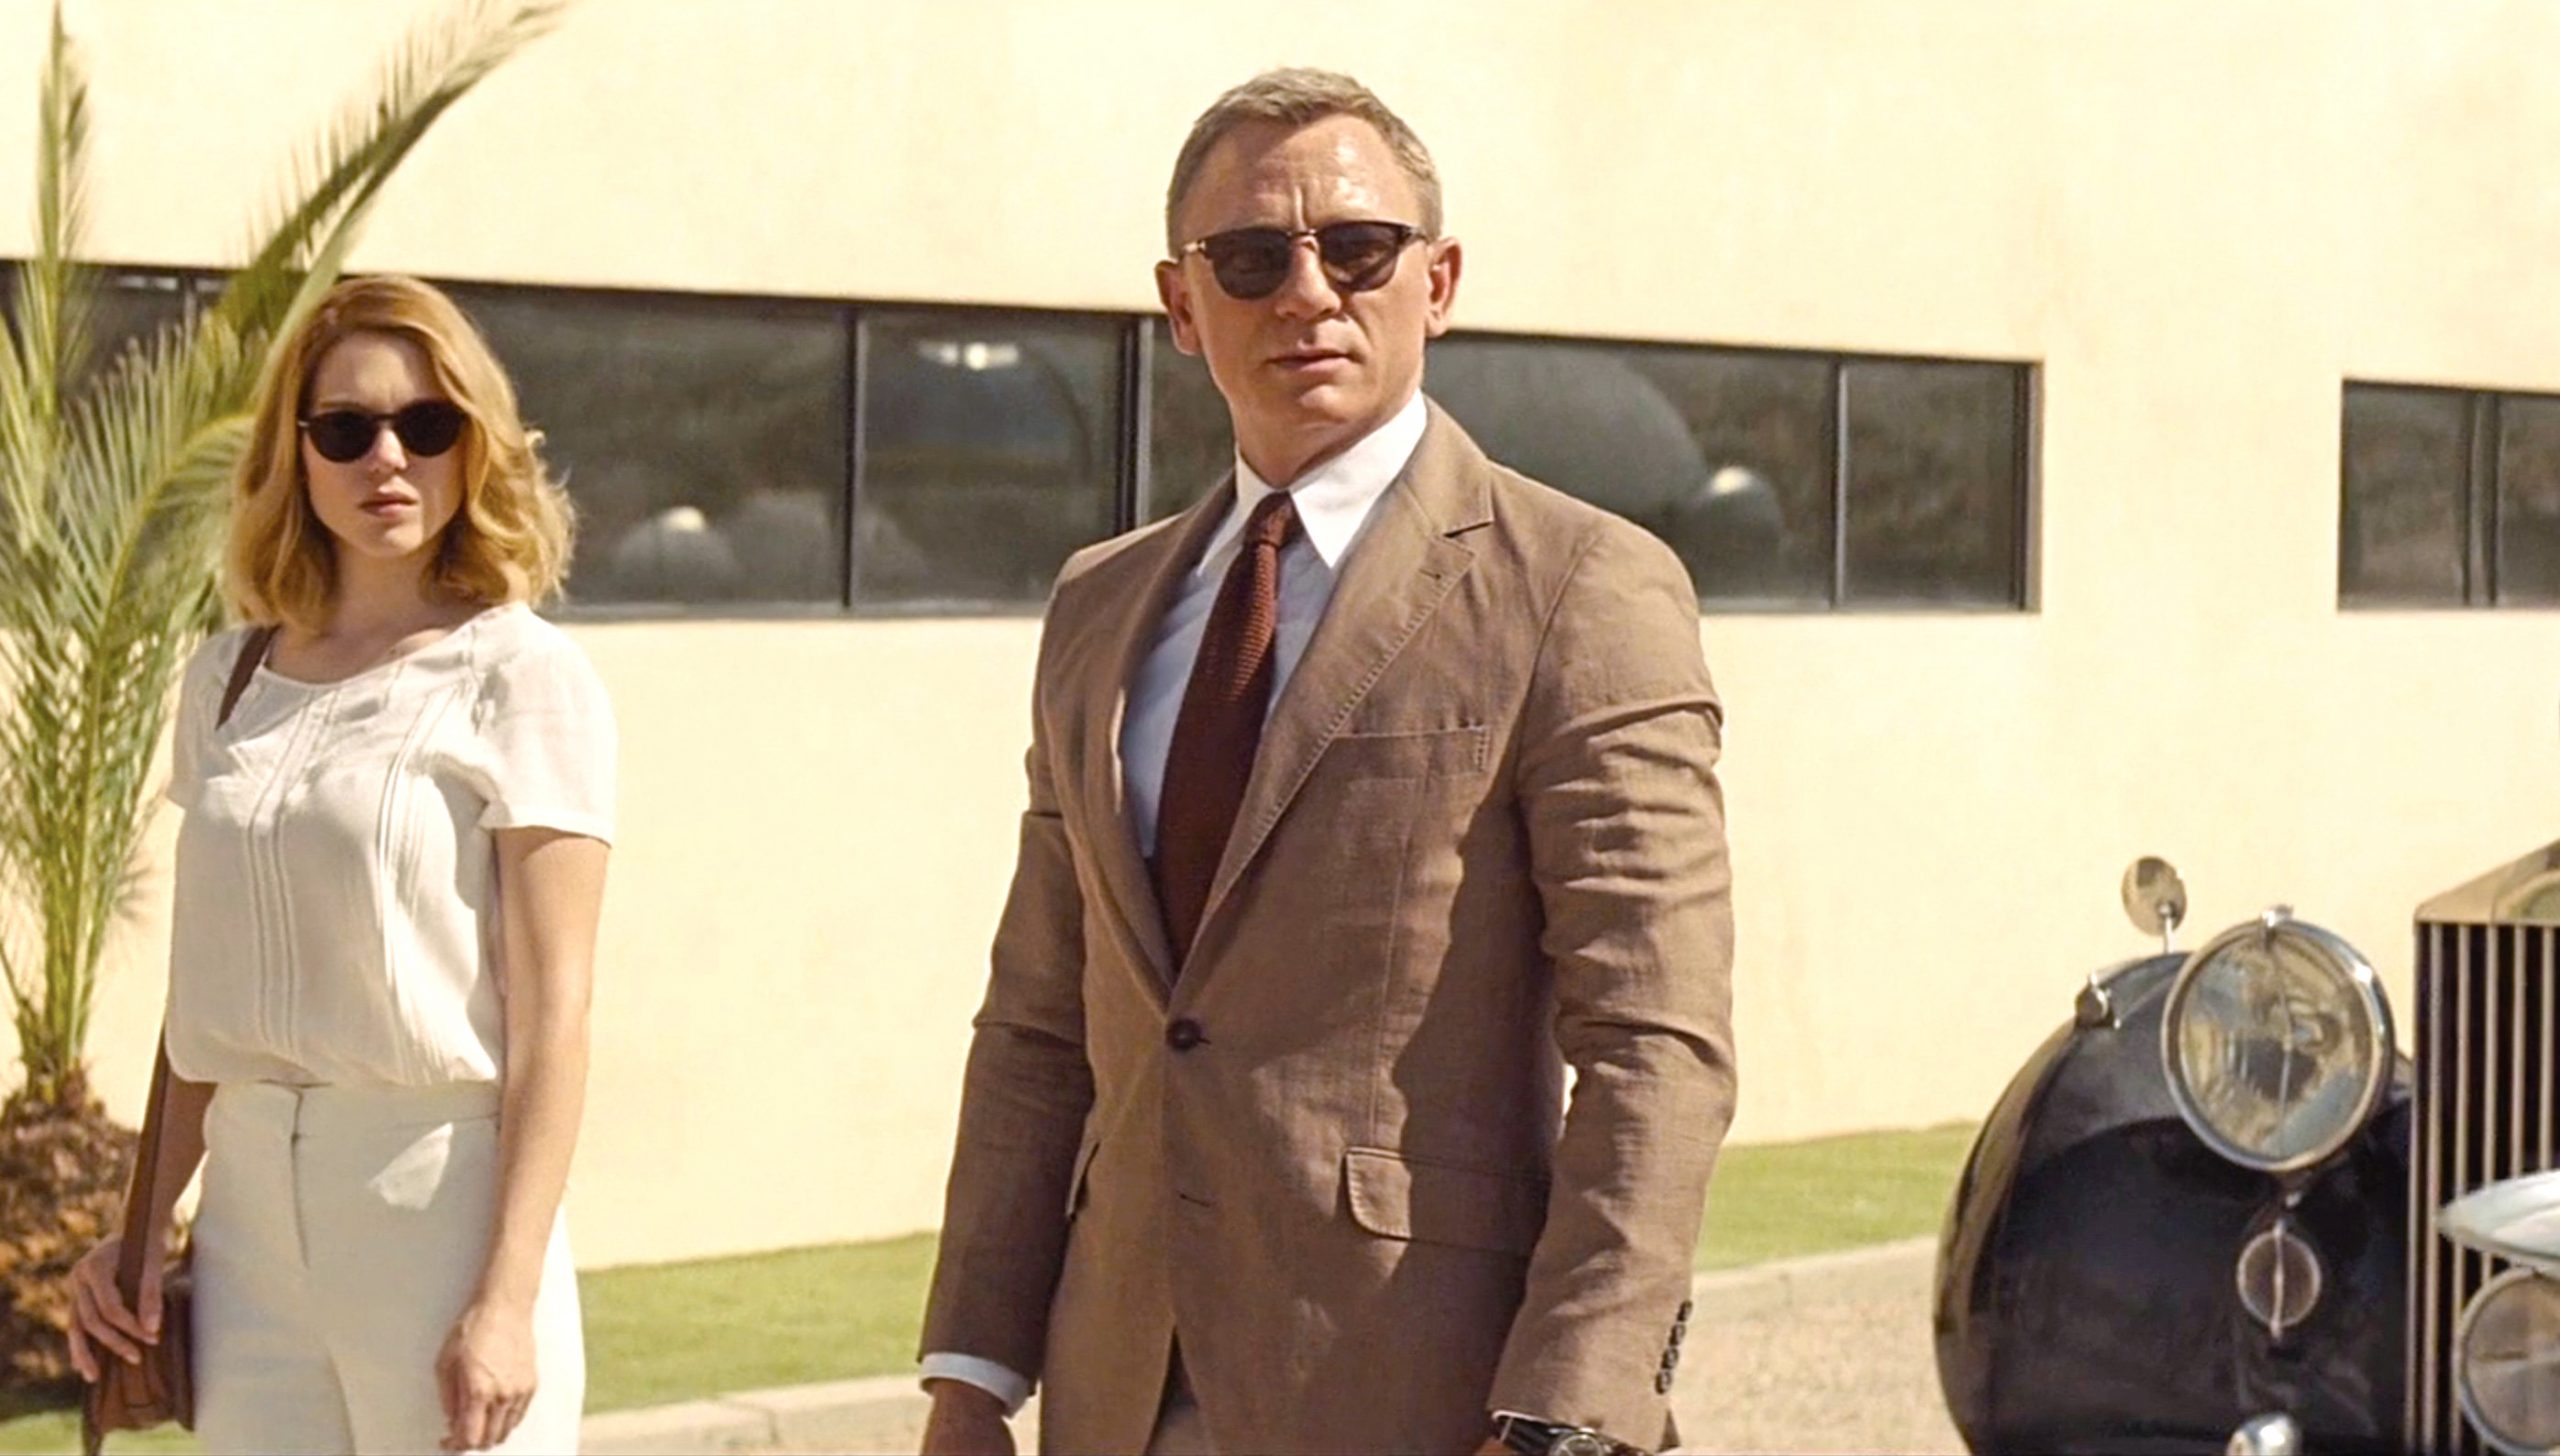 James Bond in a light-brown suit